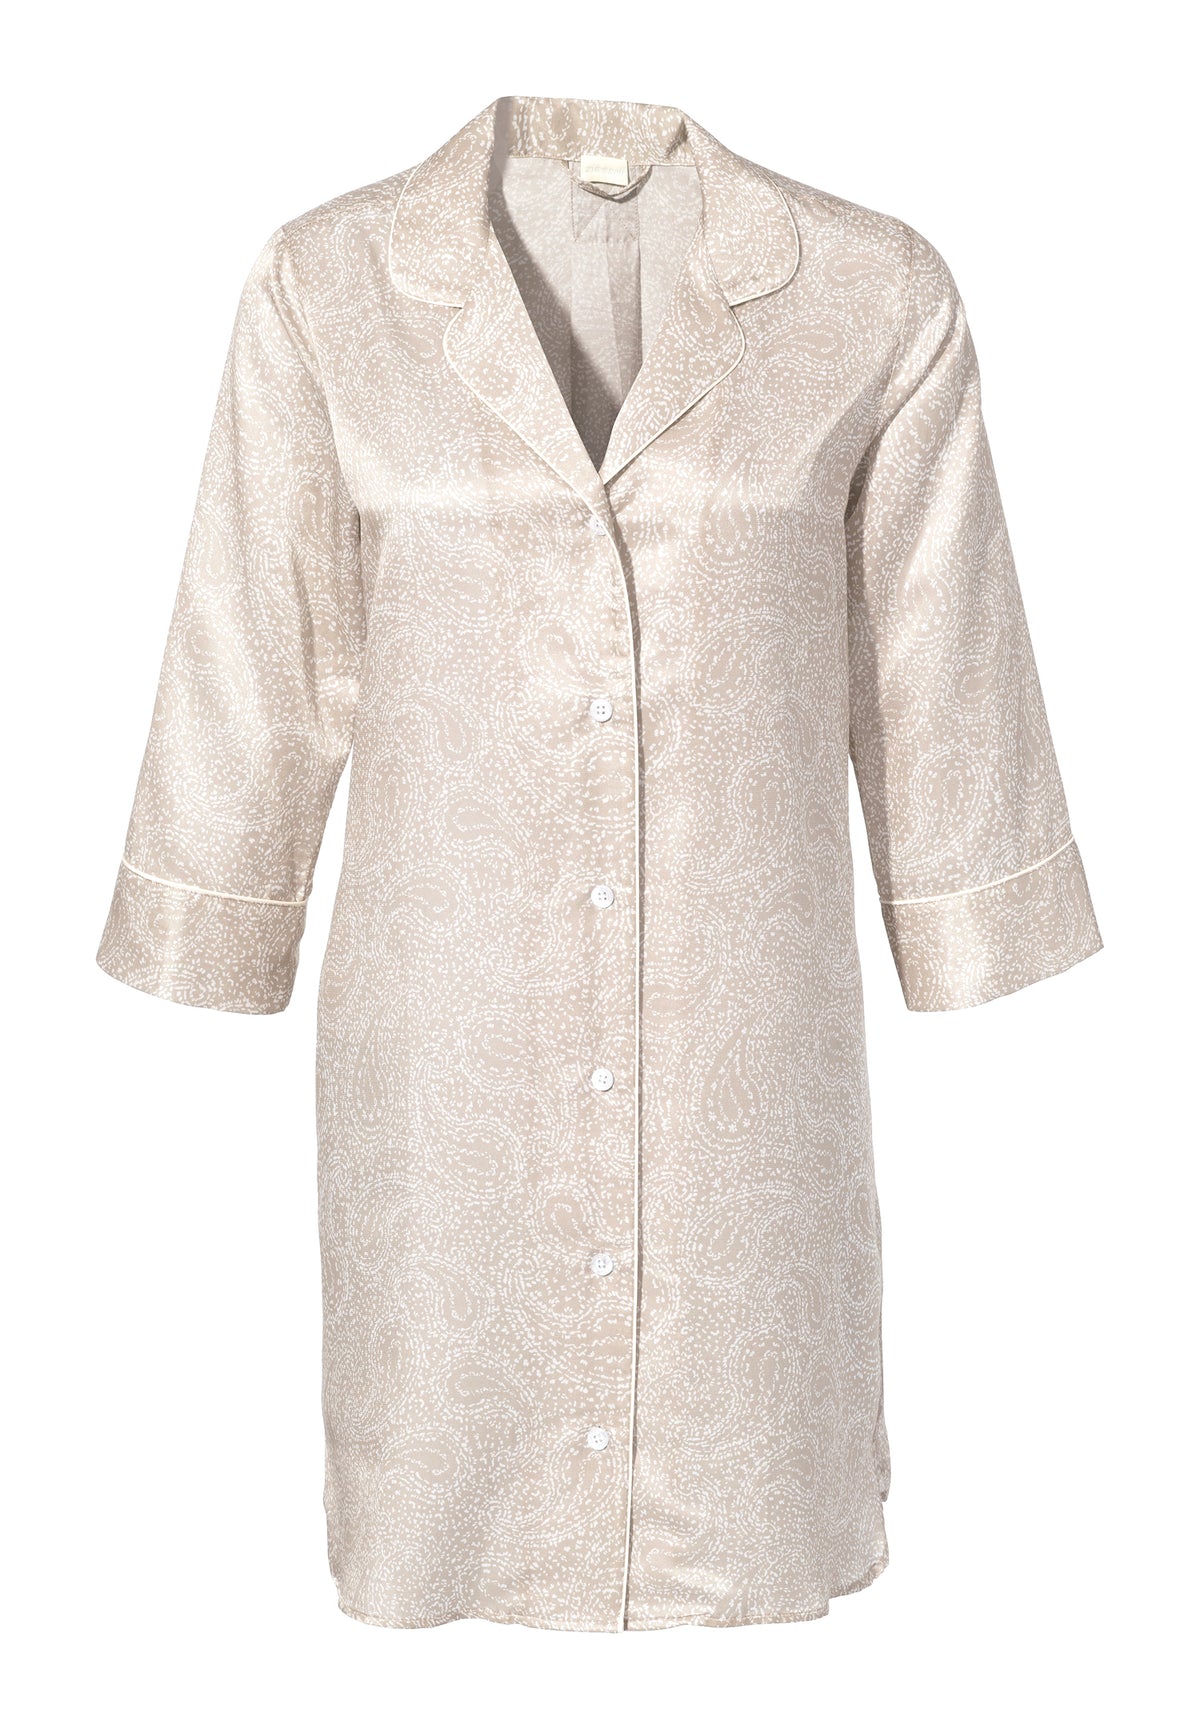 Cotton/Silk Print | Tee-shirt de nuit long manches 3/4 - paisley sand